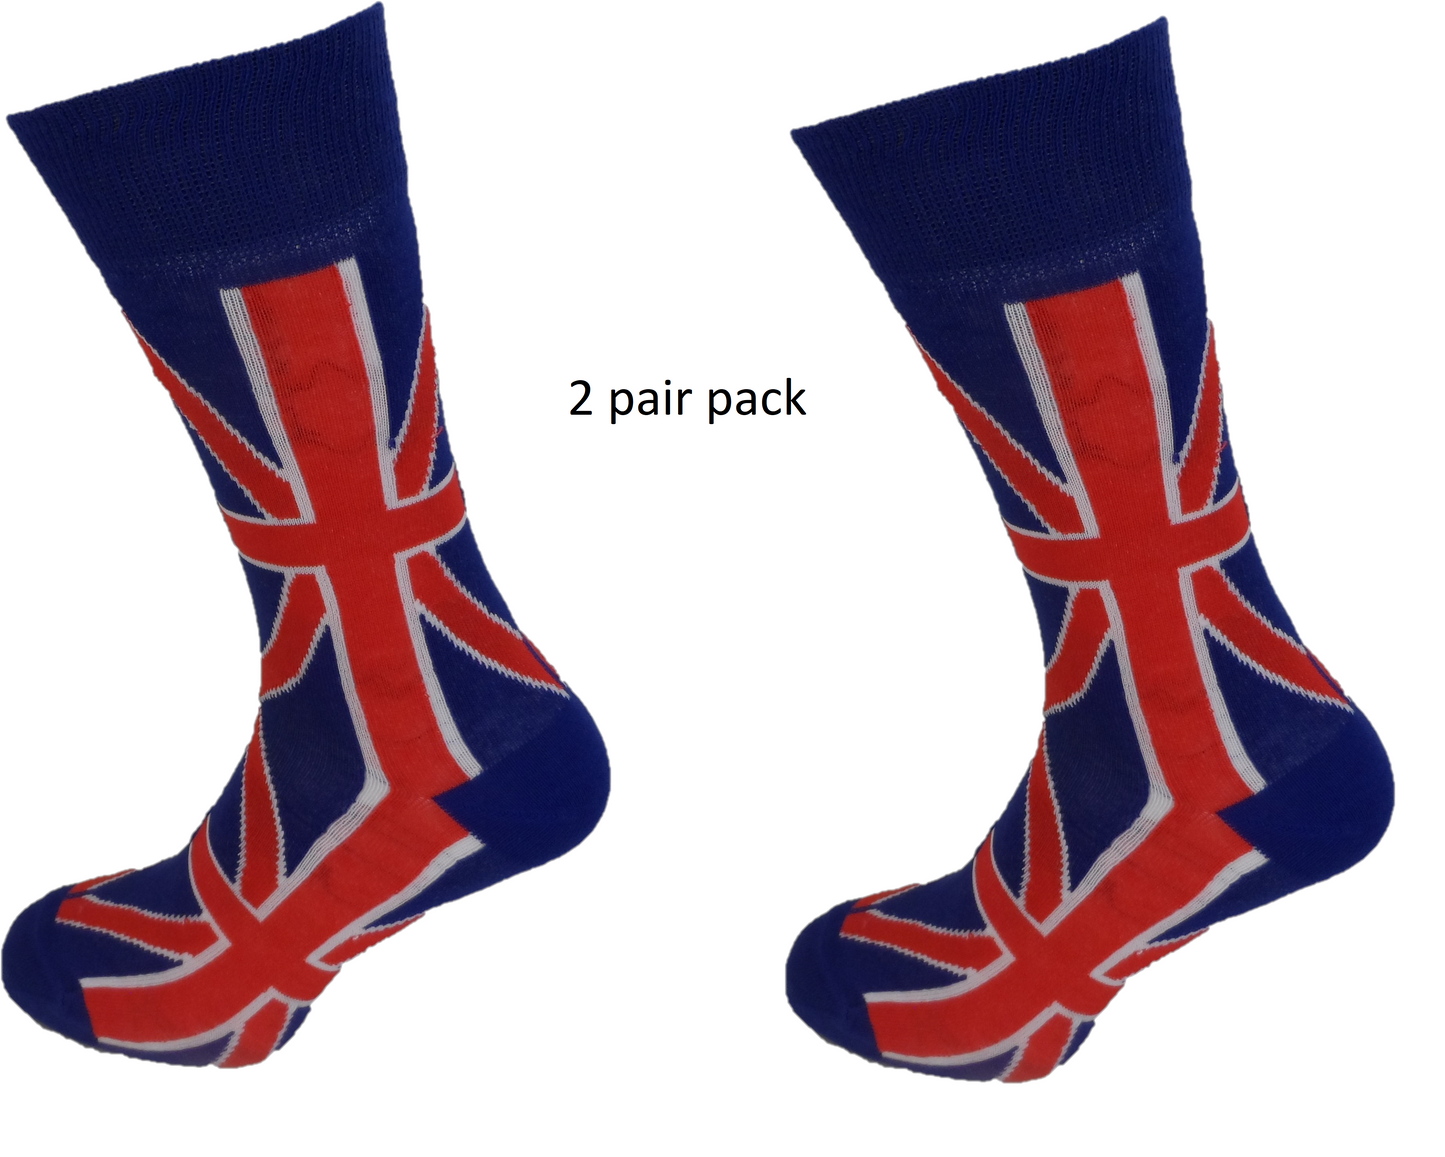 Mens 2 Pair Pack of Retro Union Jack Socks